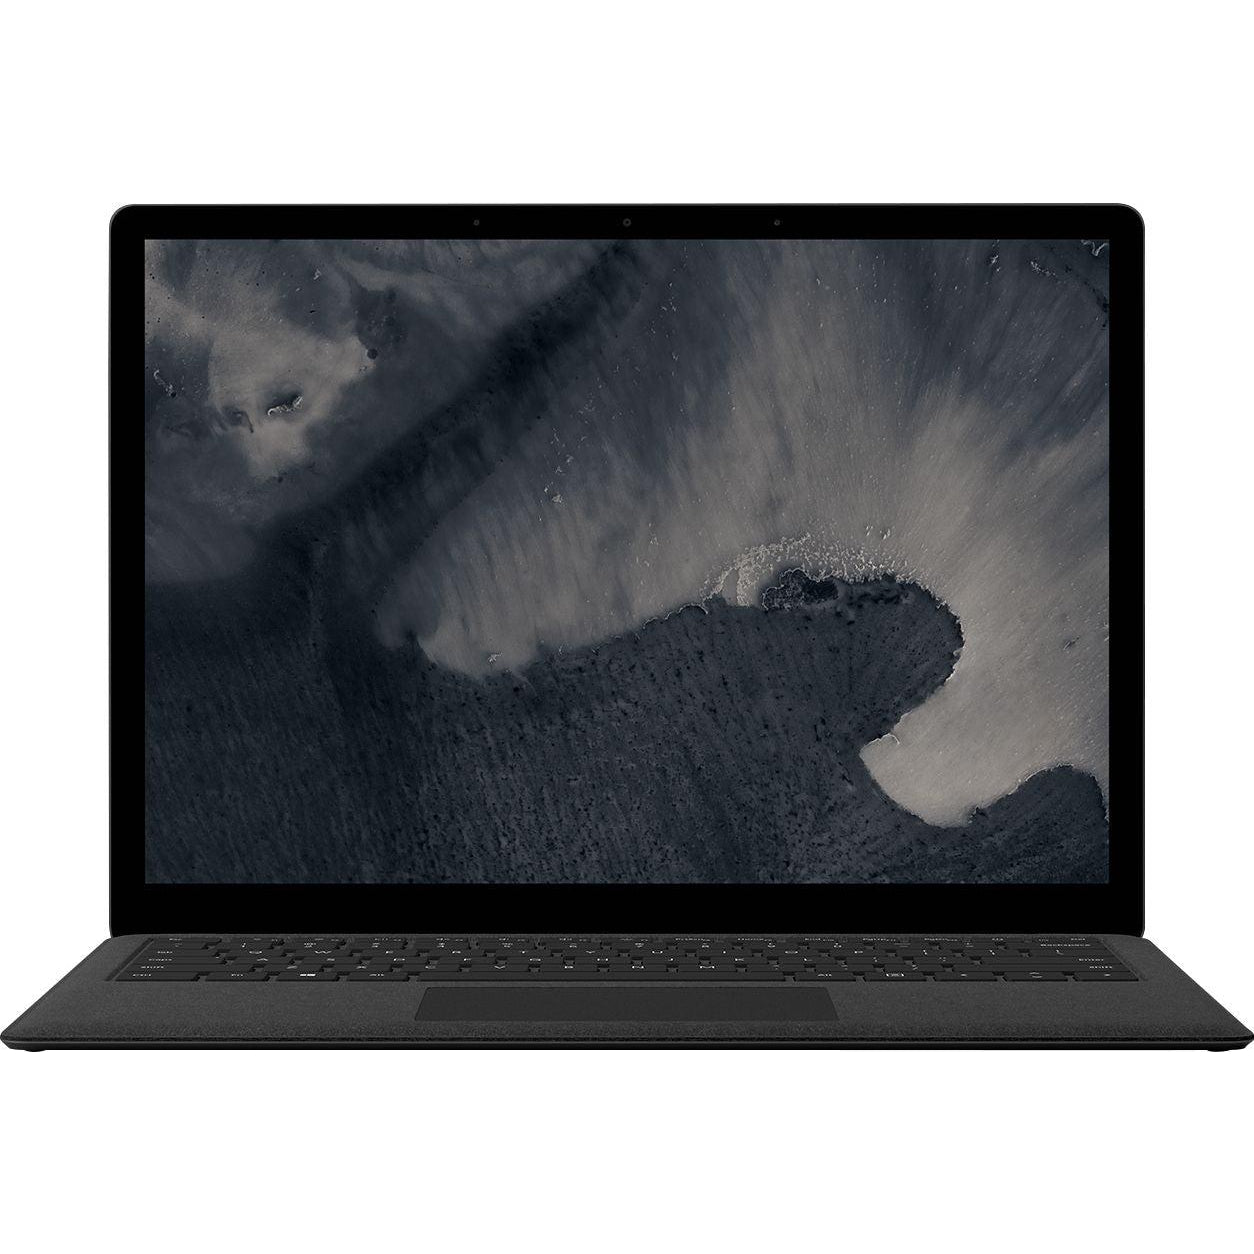 Microsoft Surface Laptop 2 1769, Intel Core i7, 8GB RAM, 256GB SSD, 13.5" PixelSense Display, Matte Black